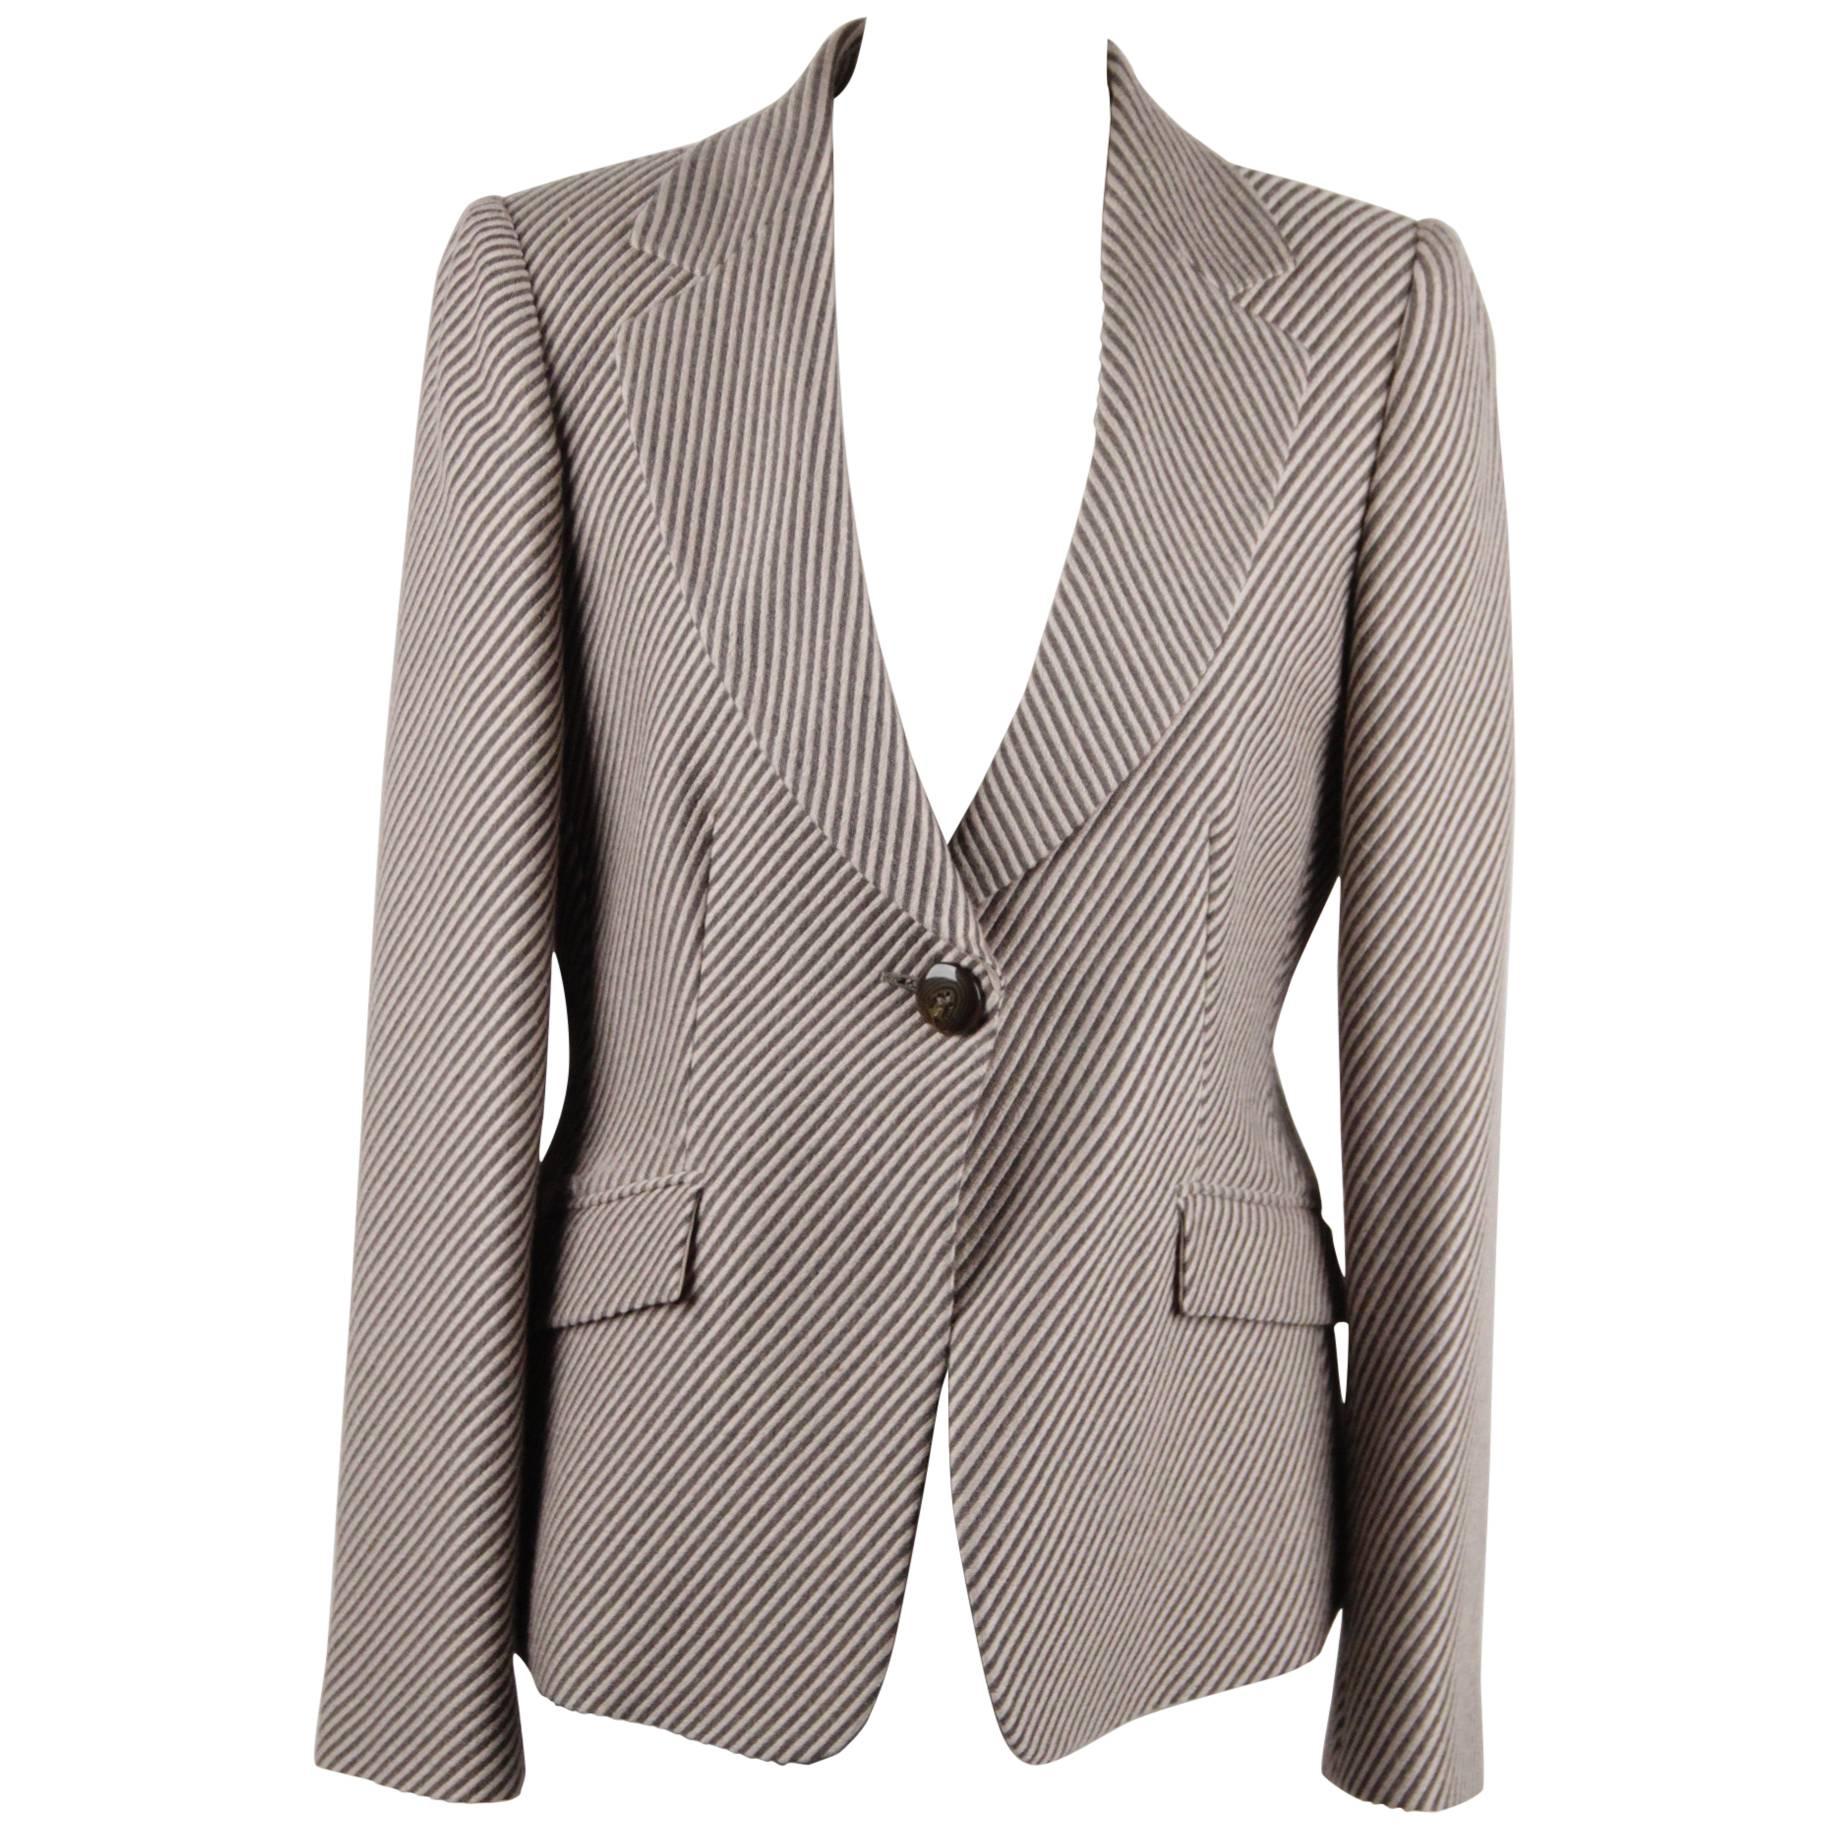 ARMANI COLLEZIONI Striped Wool & Cashmere BLAZER Jacket SIZE 44